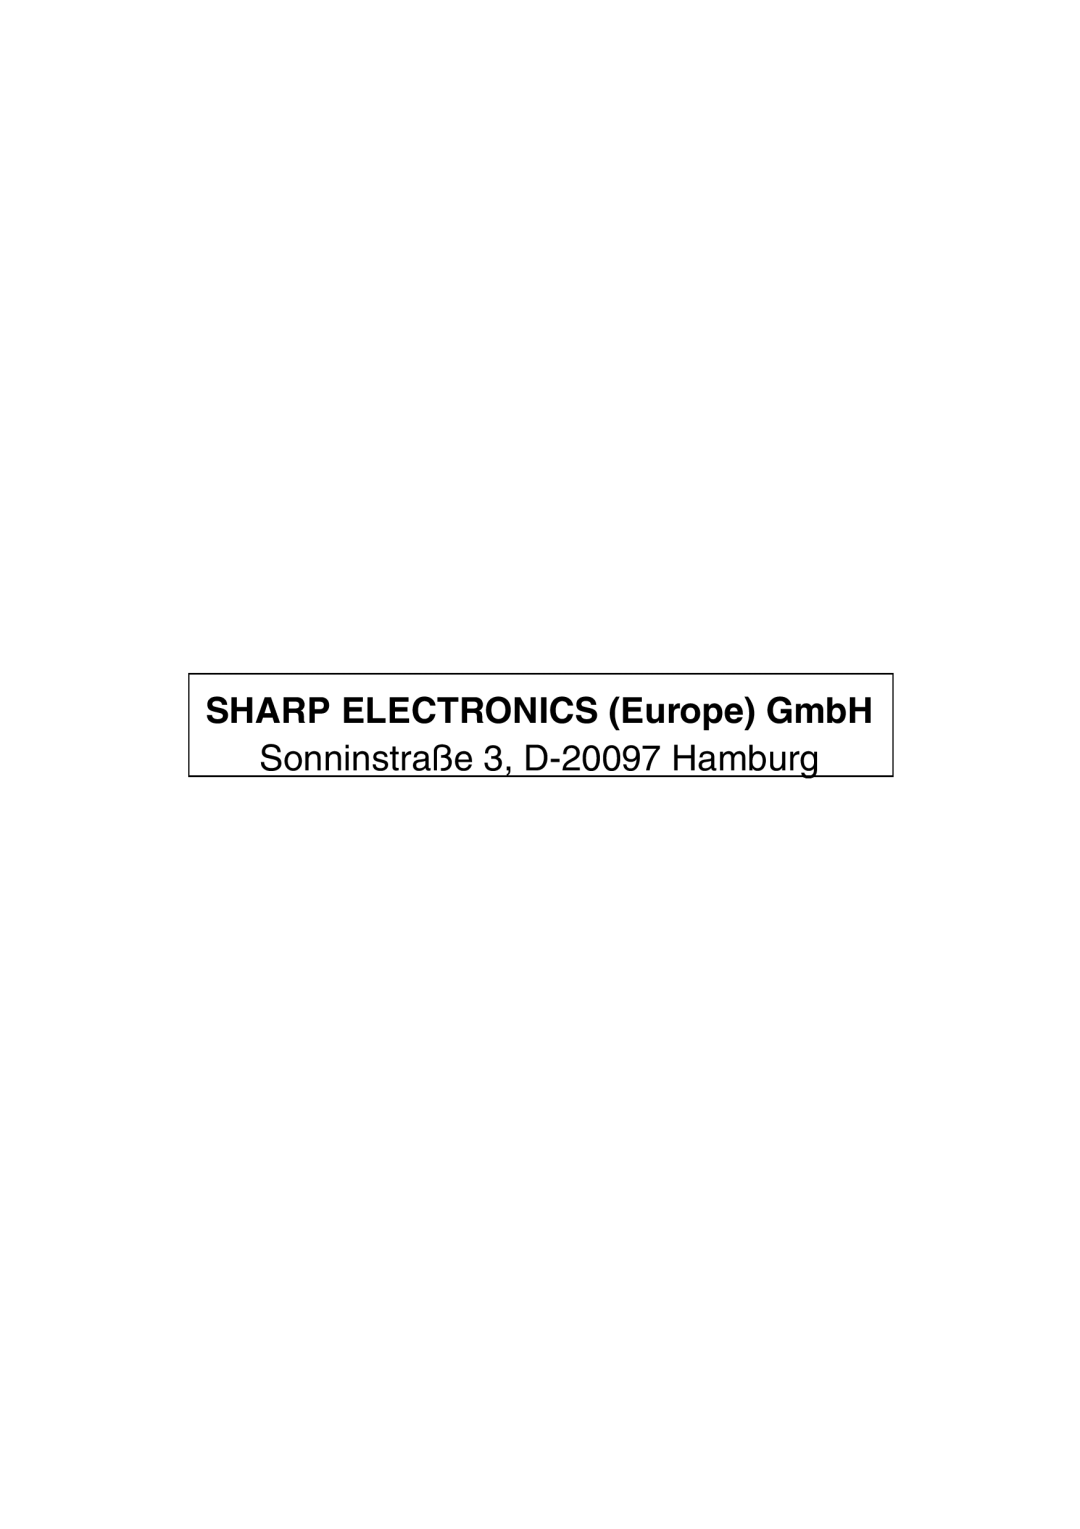 Sharp AL2041, AL2021 manual SHARP ELECTRONICS Europe GmbH, Sonninstraße 3, D-20097 Hamburg 